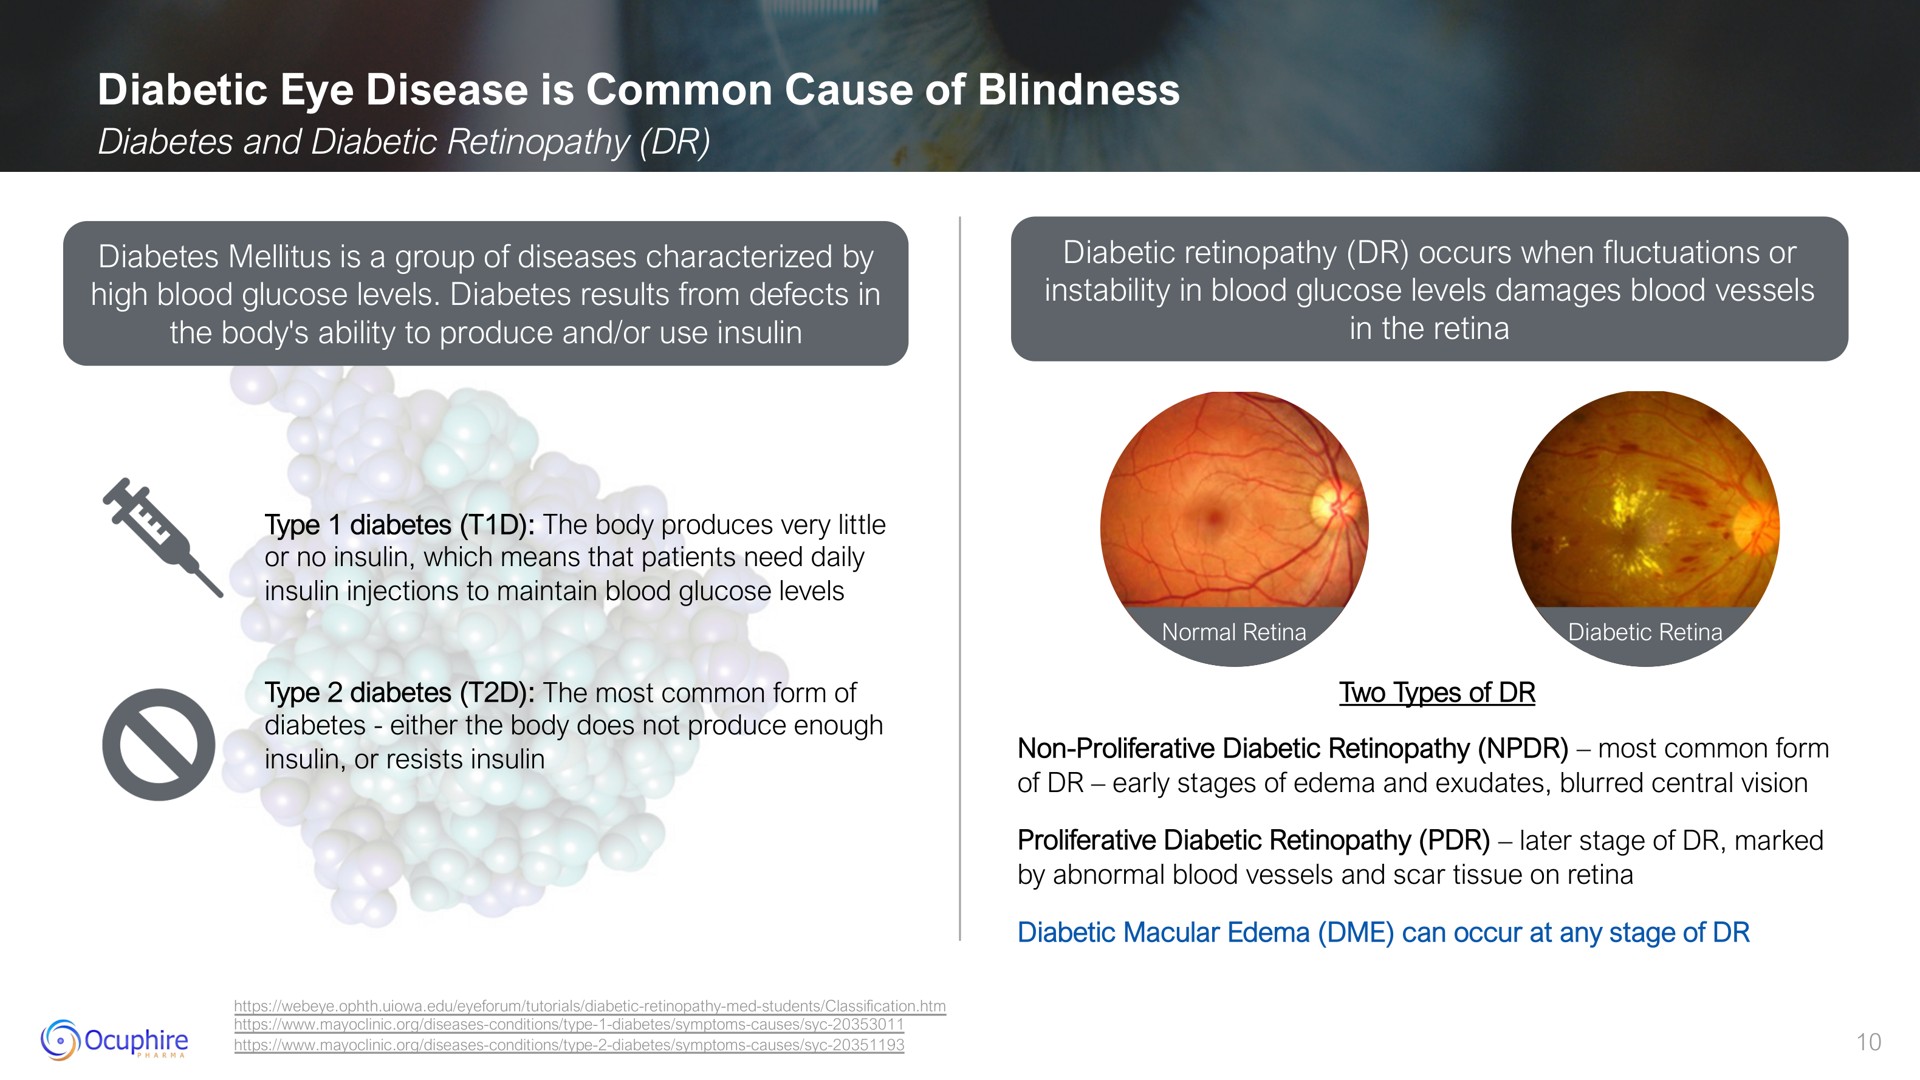 diabetic eye disease is common cause of blindness | Ocuphire Pharma